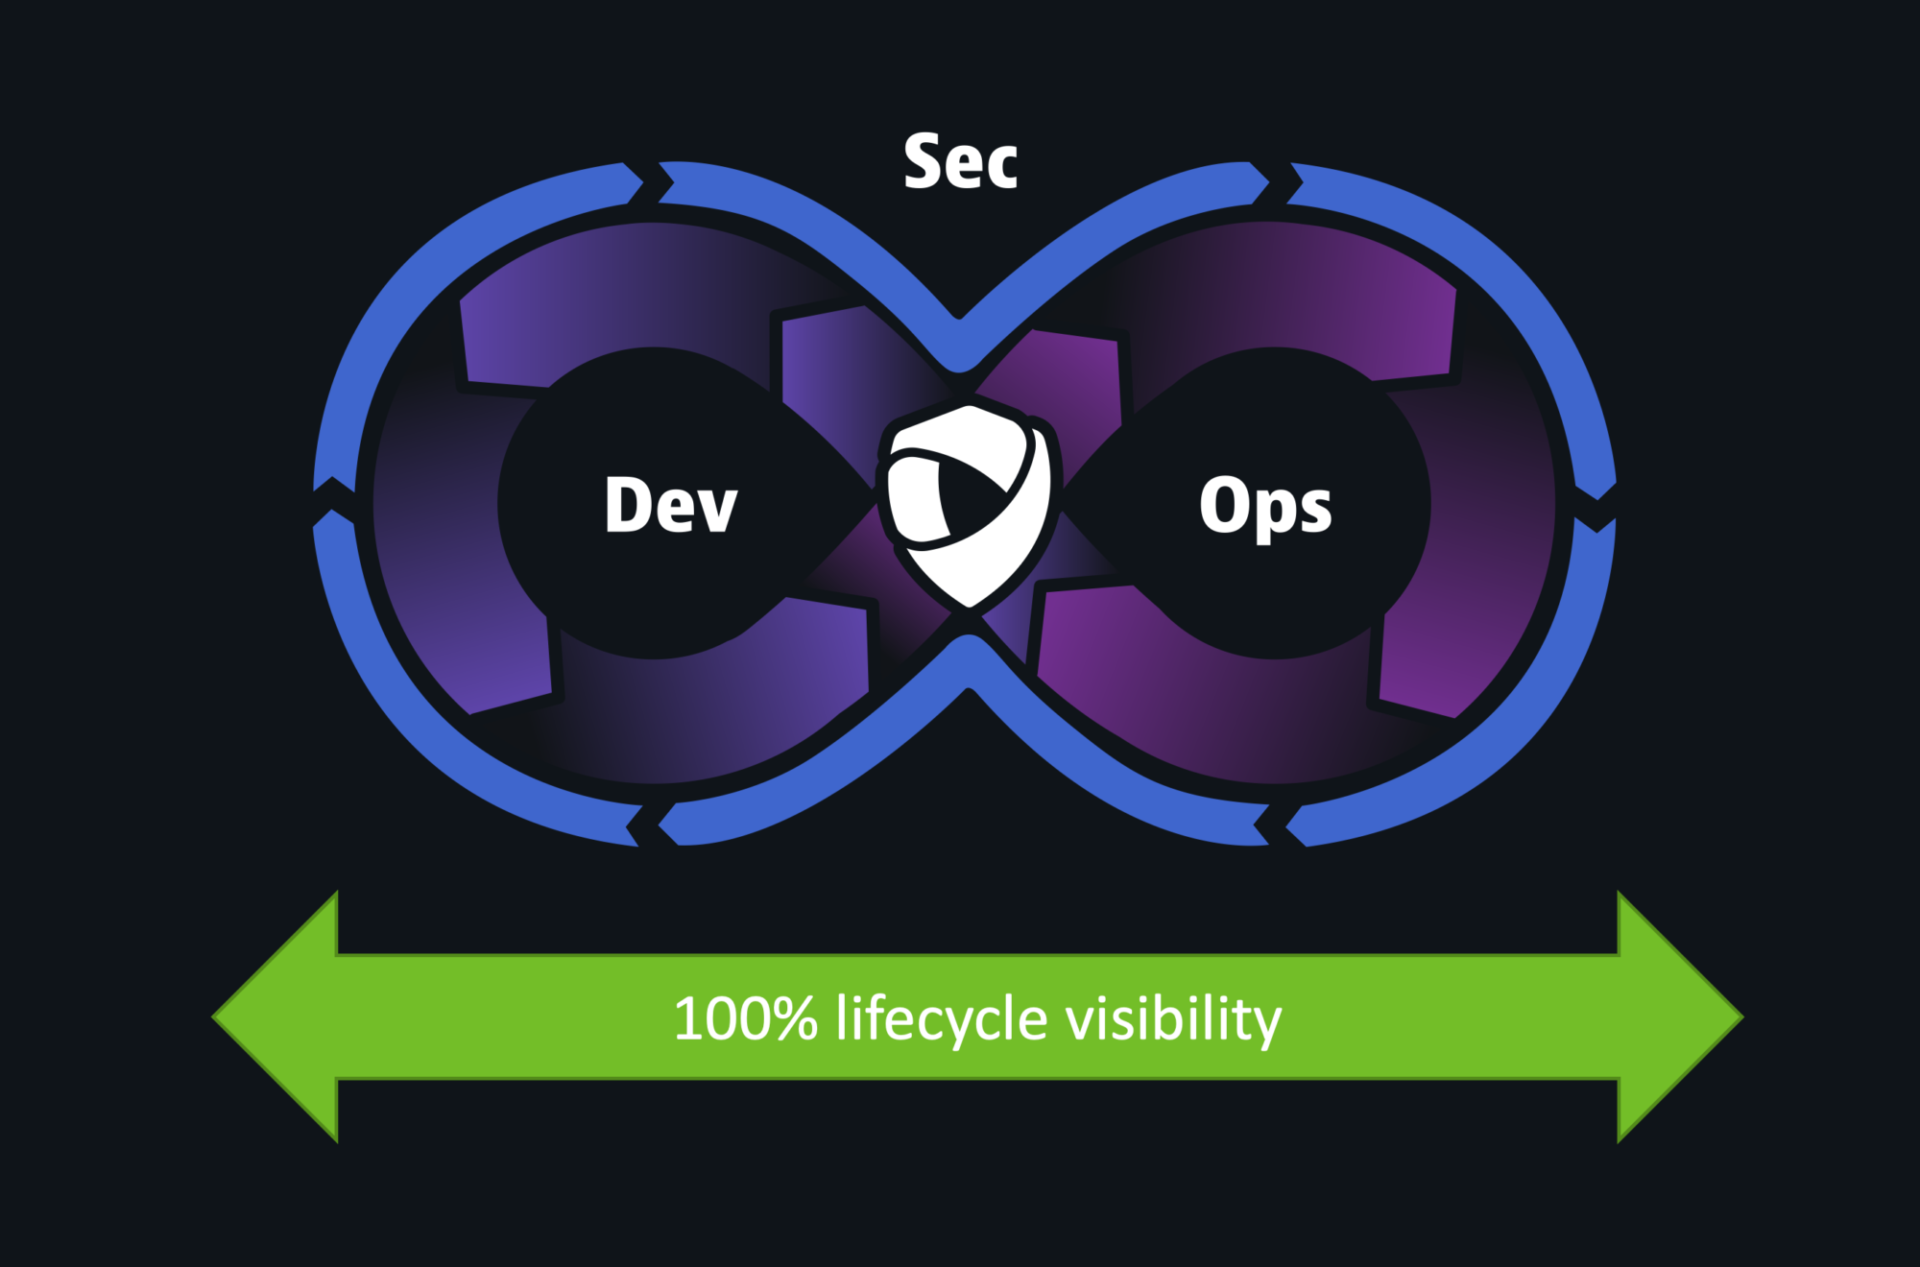 Dev Sec Ops graphic